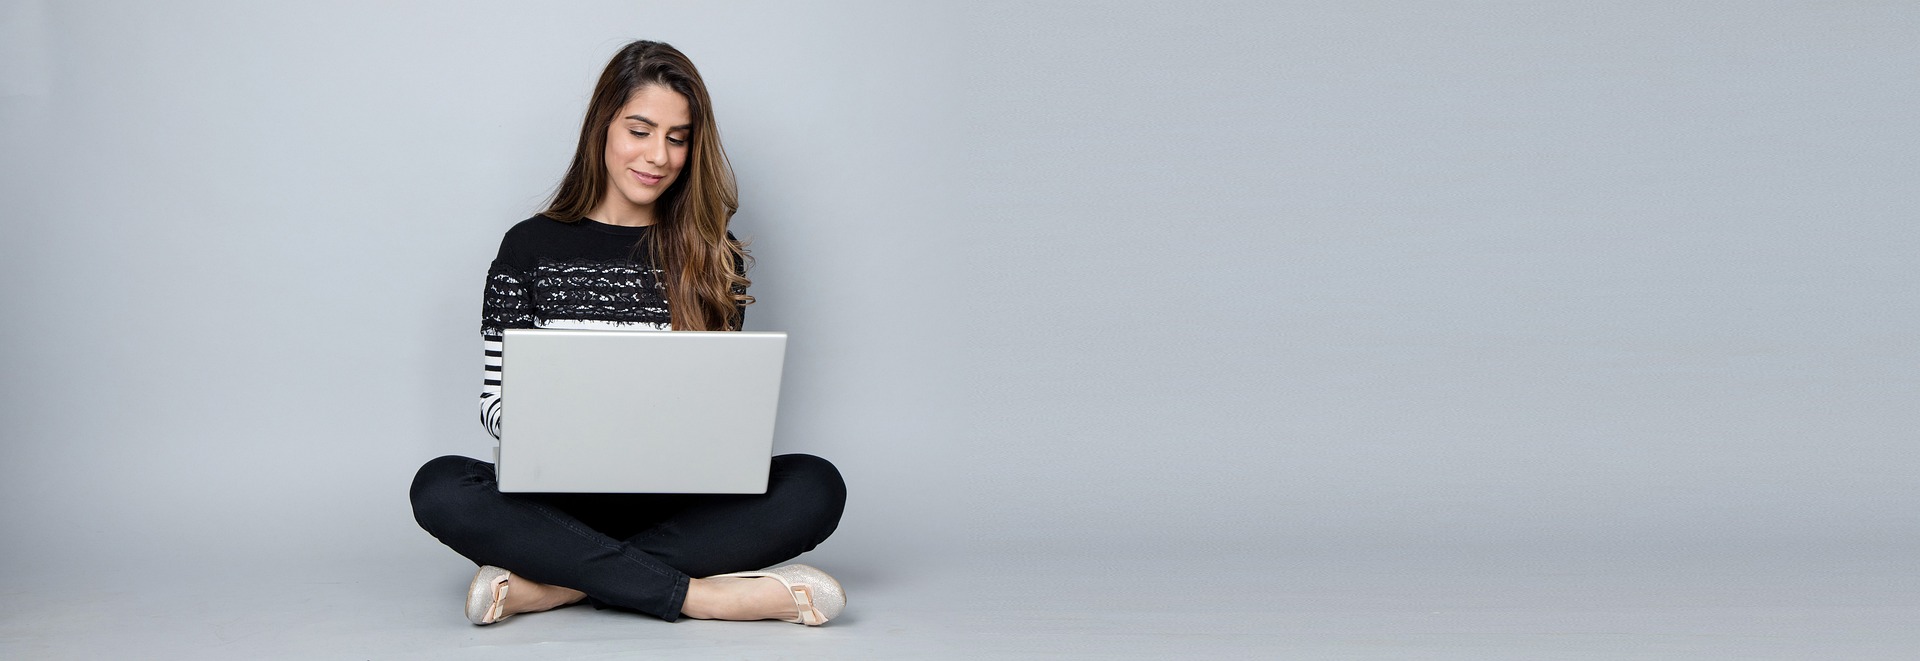 woman on laptop blogging